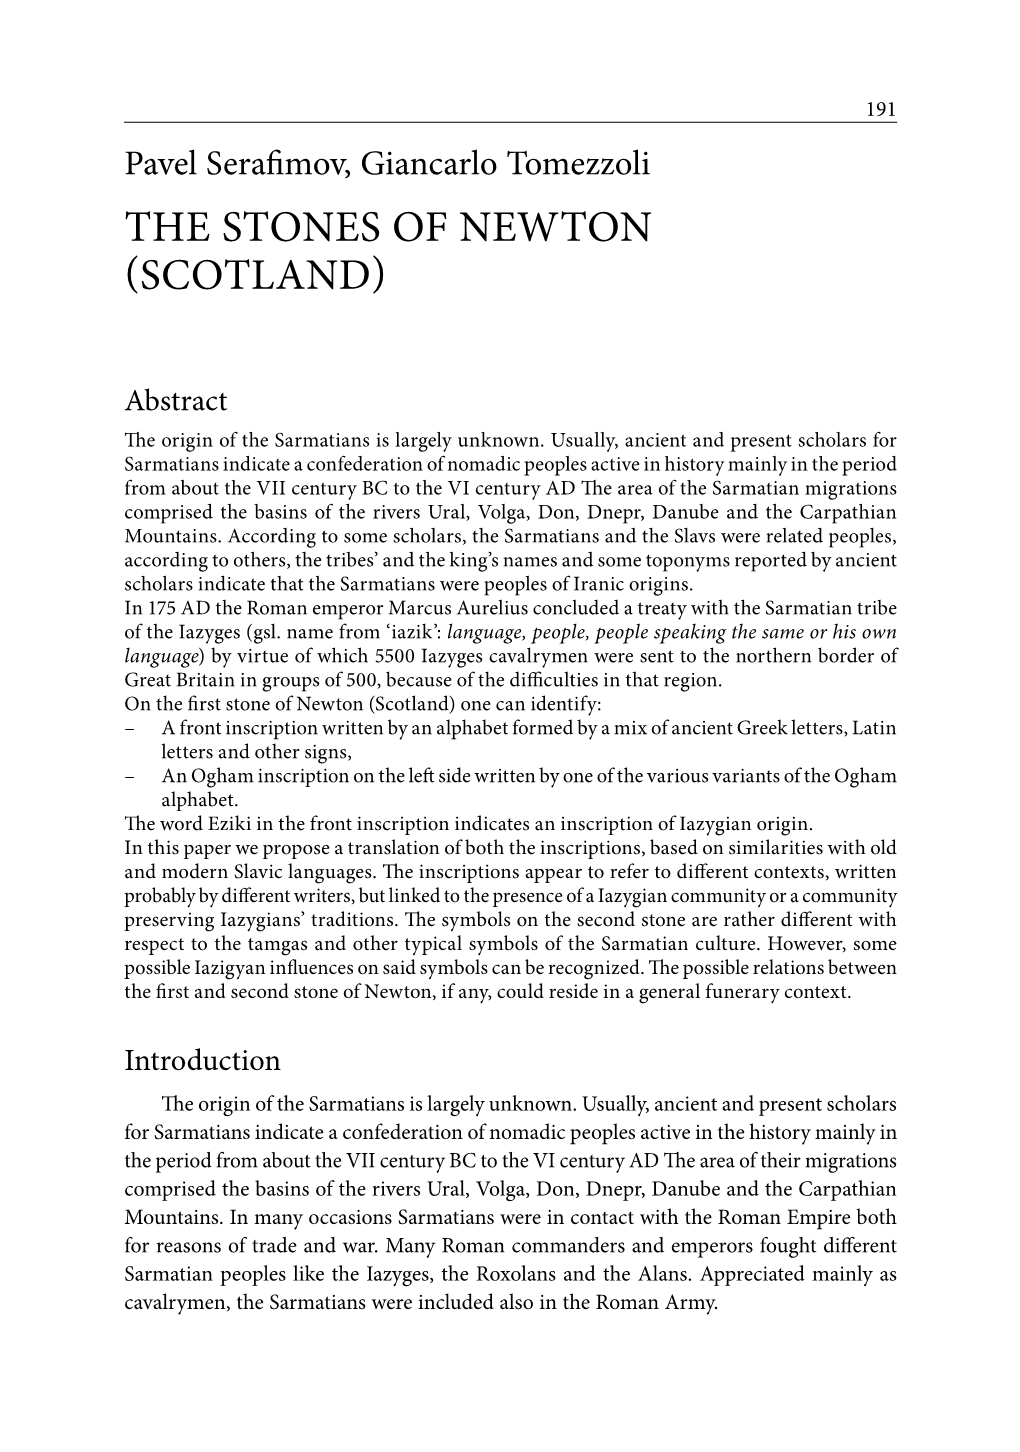 The Stones of Newton (Scotland)